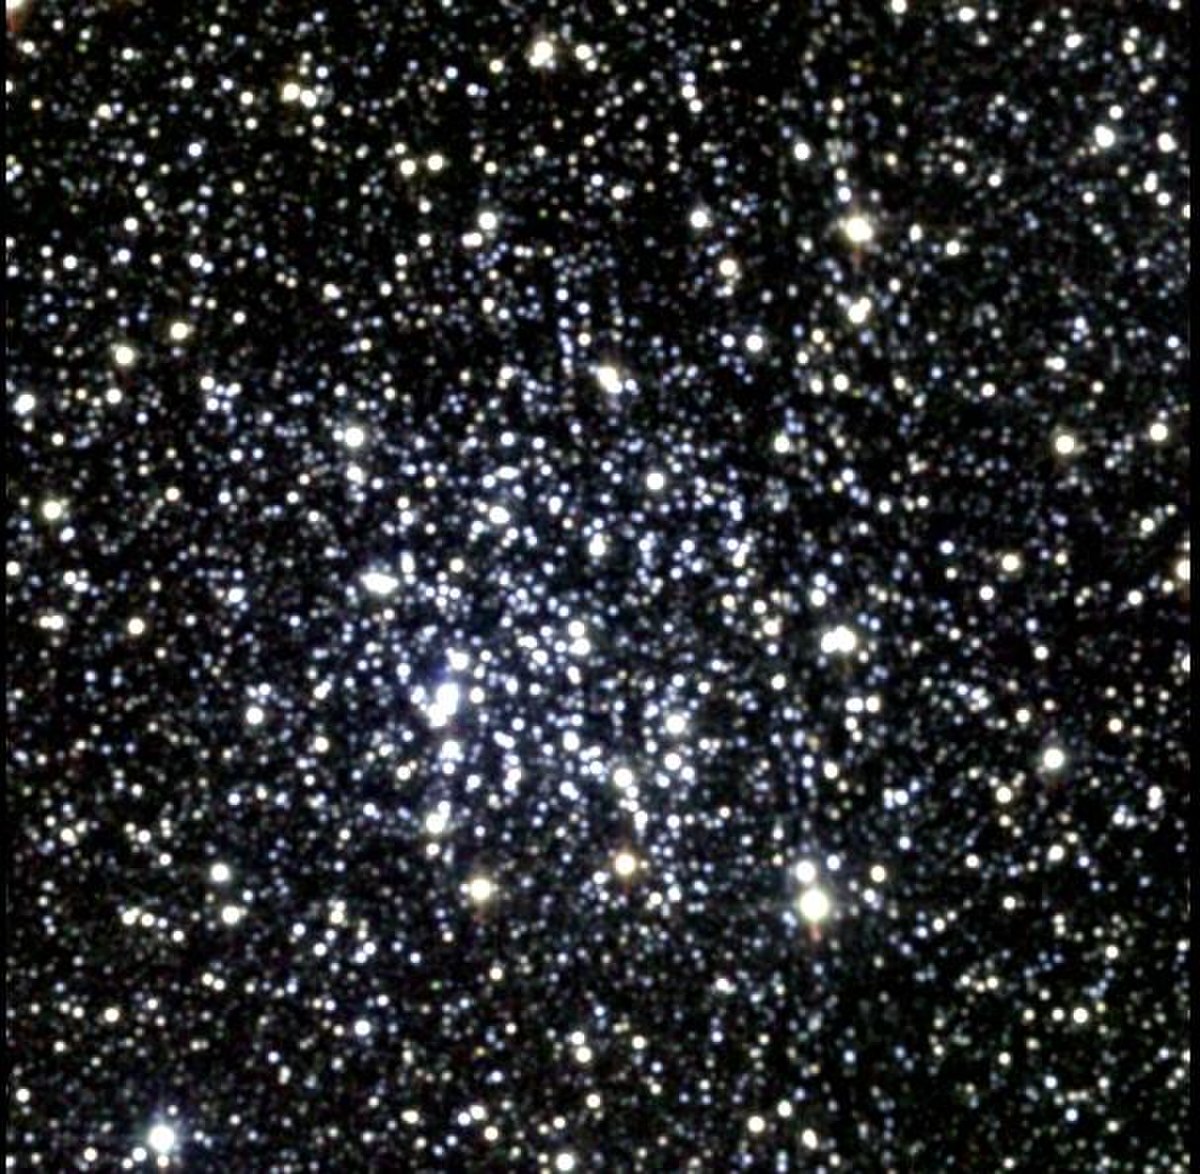 Messier object 011.jpg